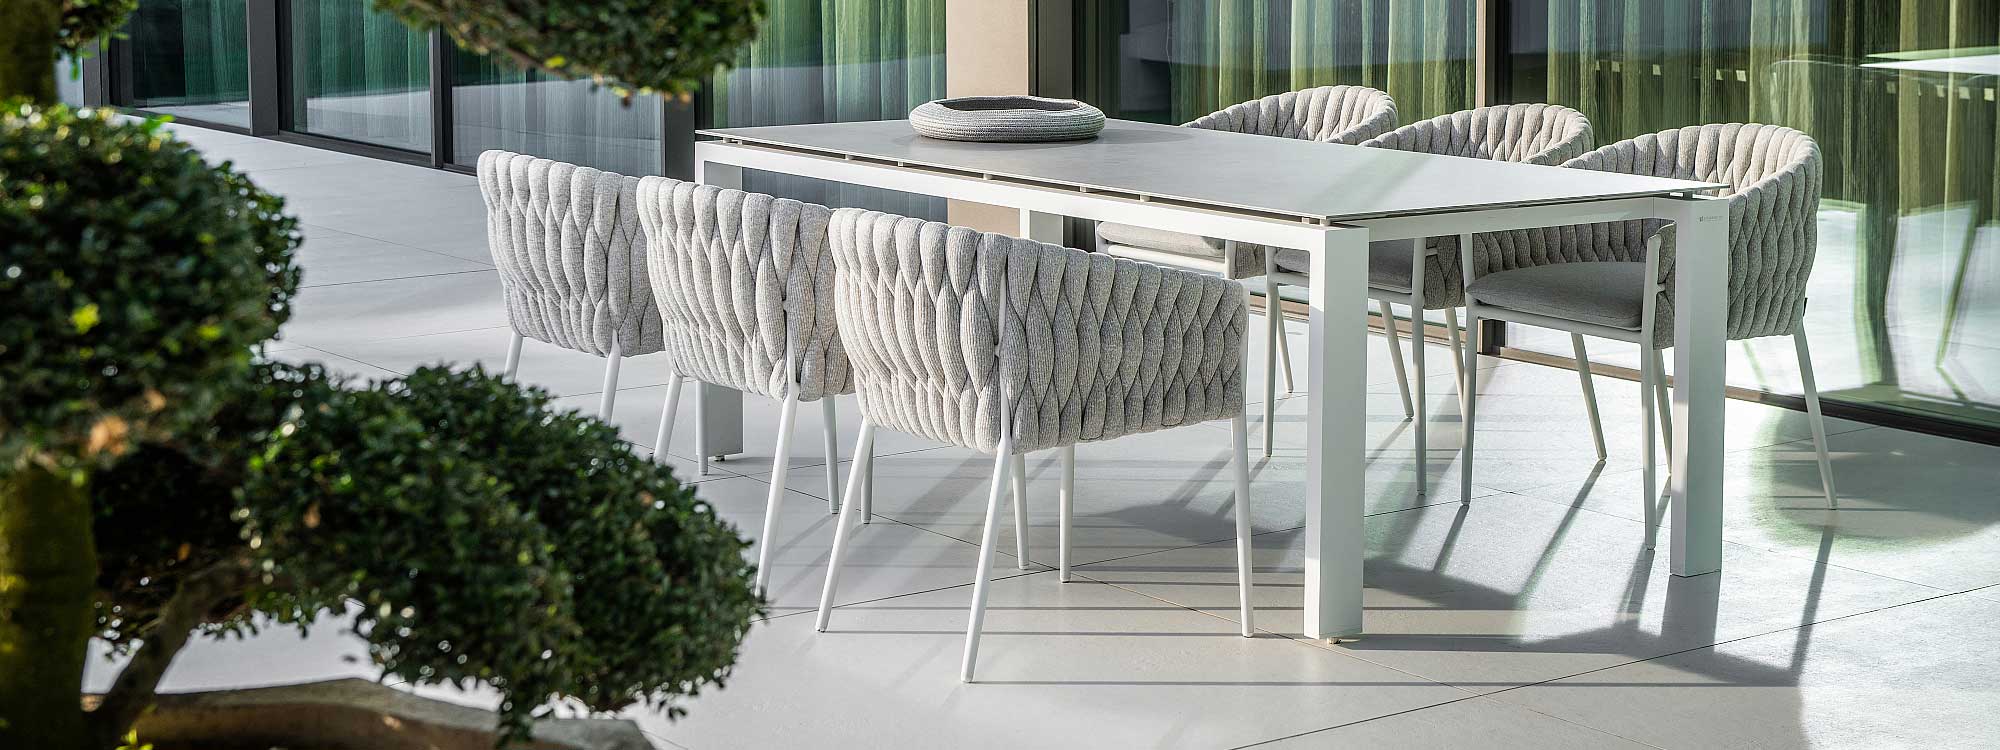 Image of white-grey Fortuna Socks garden tub chairs around a rectangular Jati & Kebon garden dining table